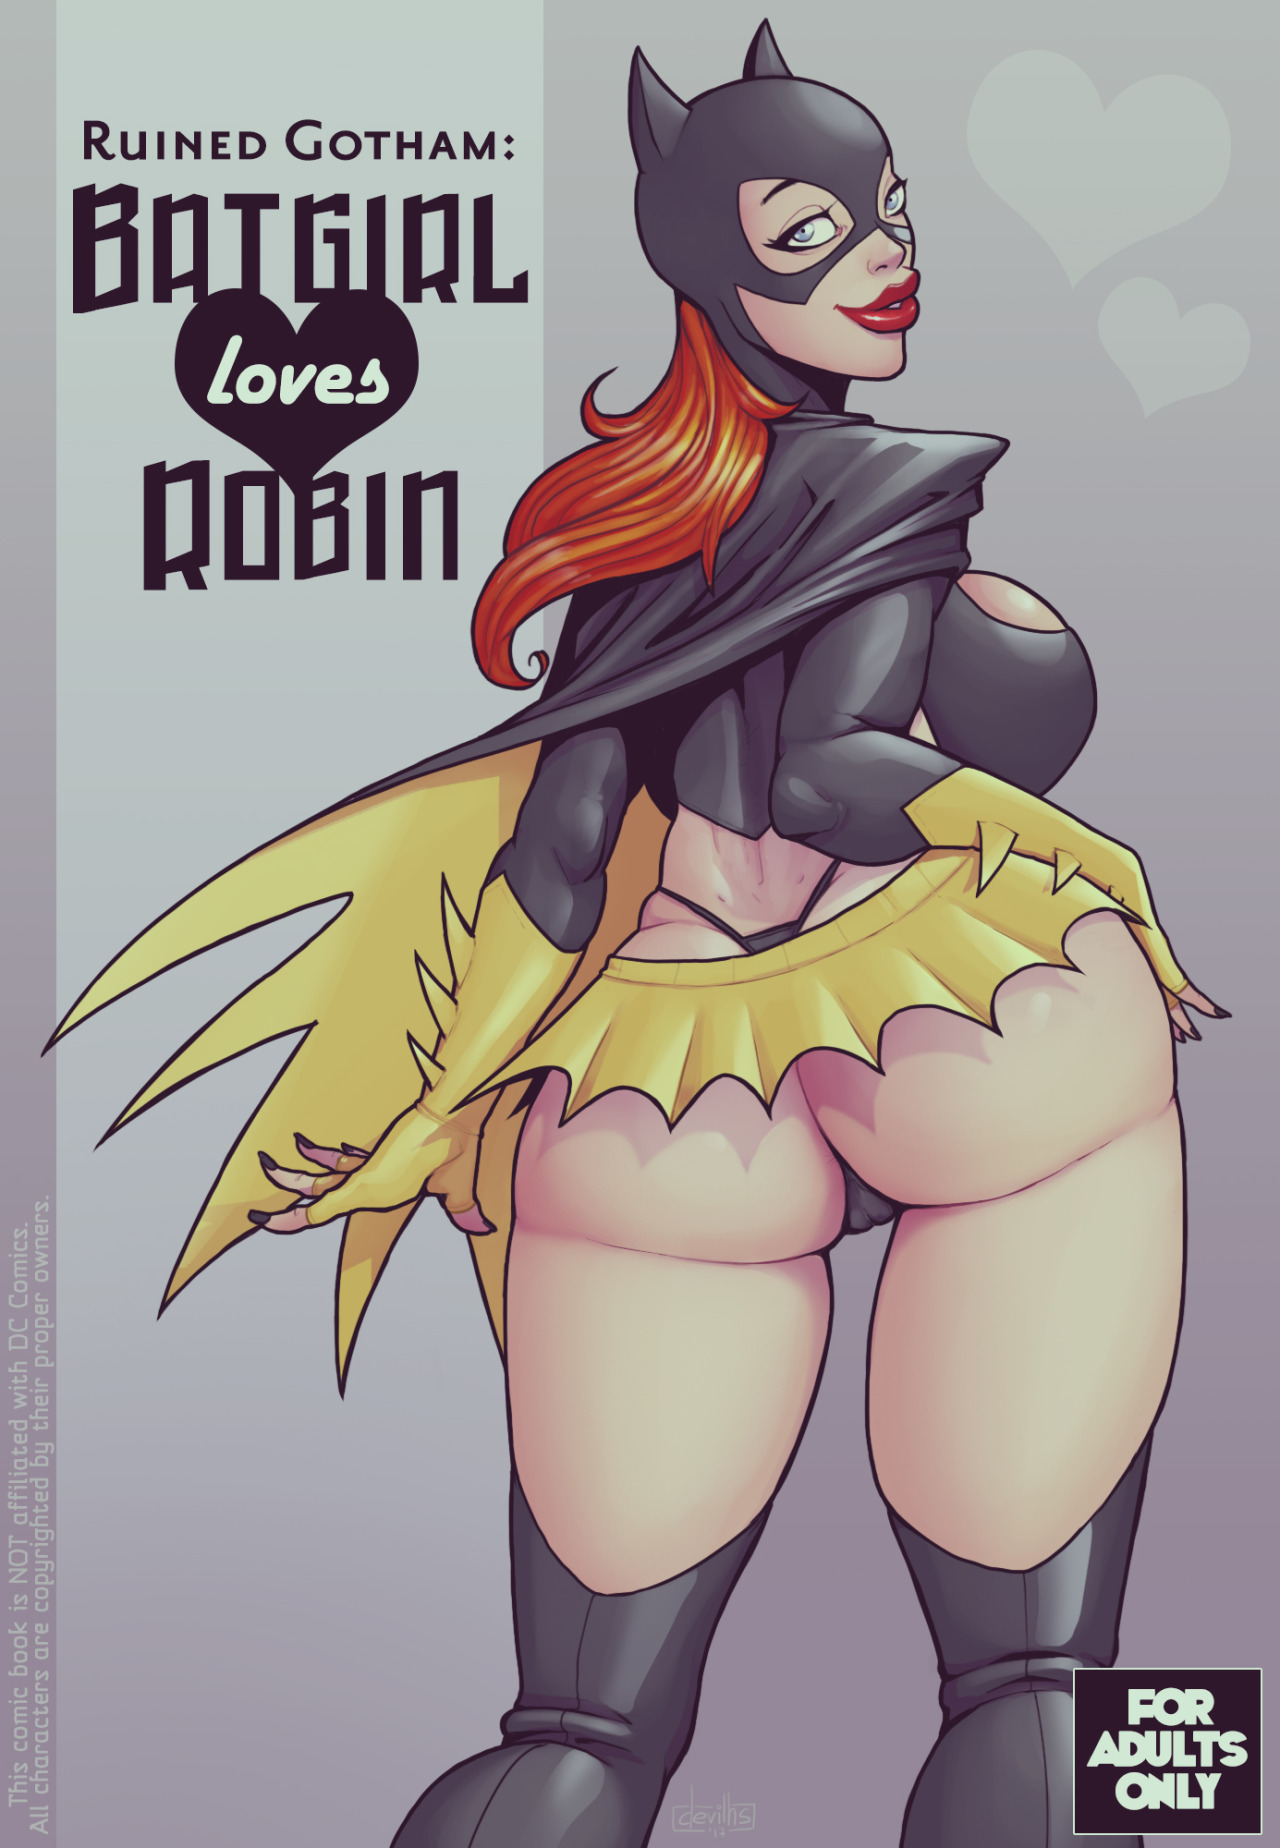 Sexy batgirl in DevilHS Ruined Gotham Batgirl loves Robin Ongoing Porn Comic